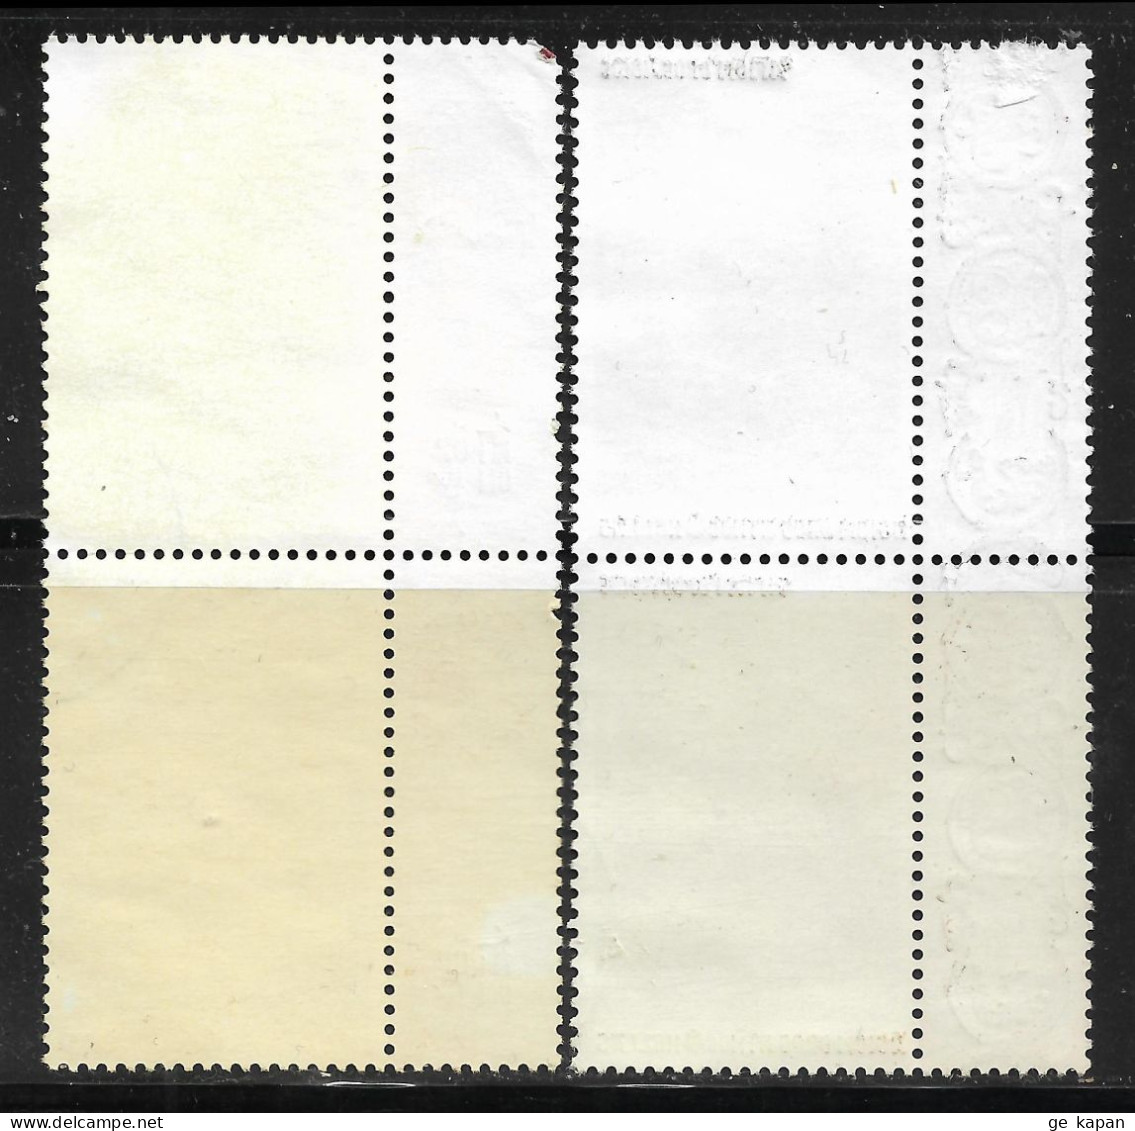 2008,2009 GREECE Mount Athos Set Of 2 Used Pair Stamps (Scott # 3,39) CV $10.50 - Usados